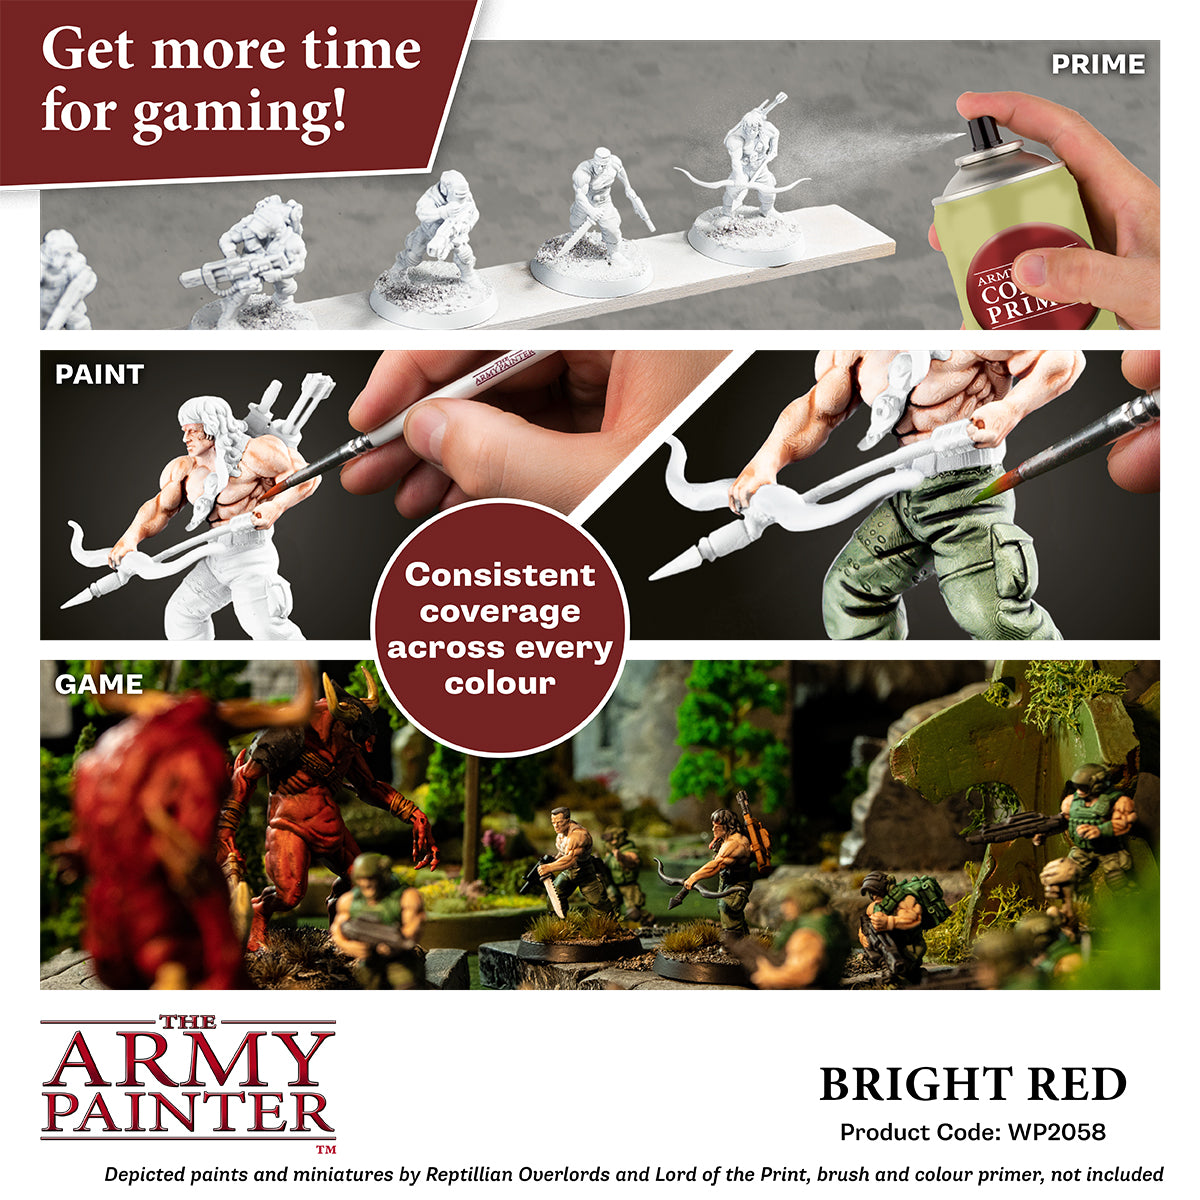 Army Painter: Speedpaint 2.0 - Bright Red